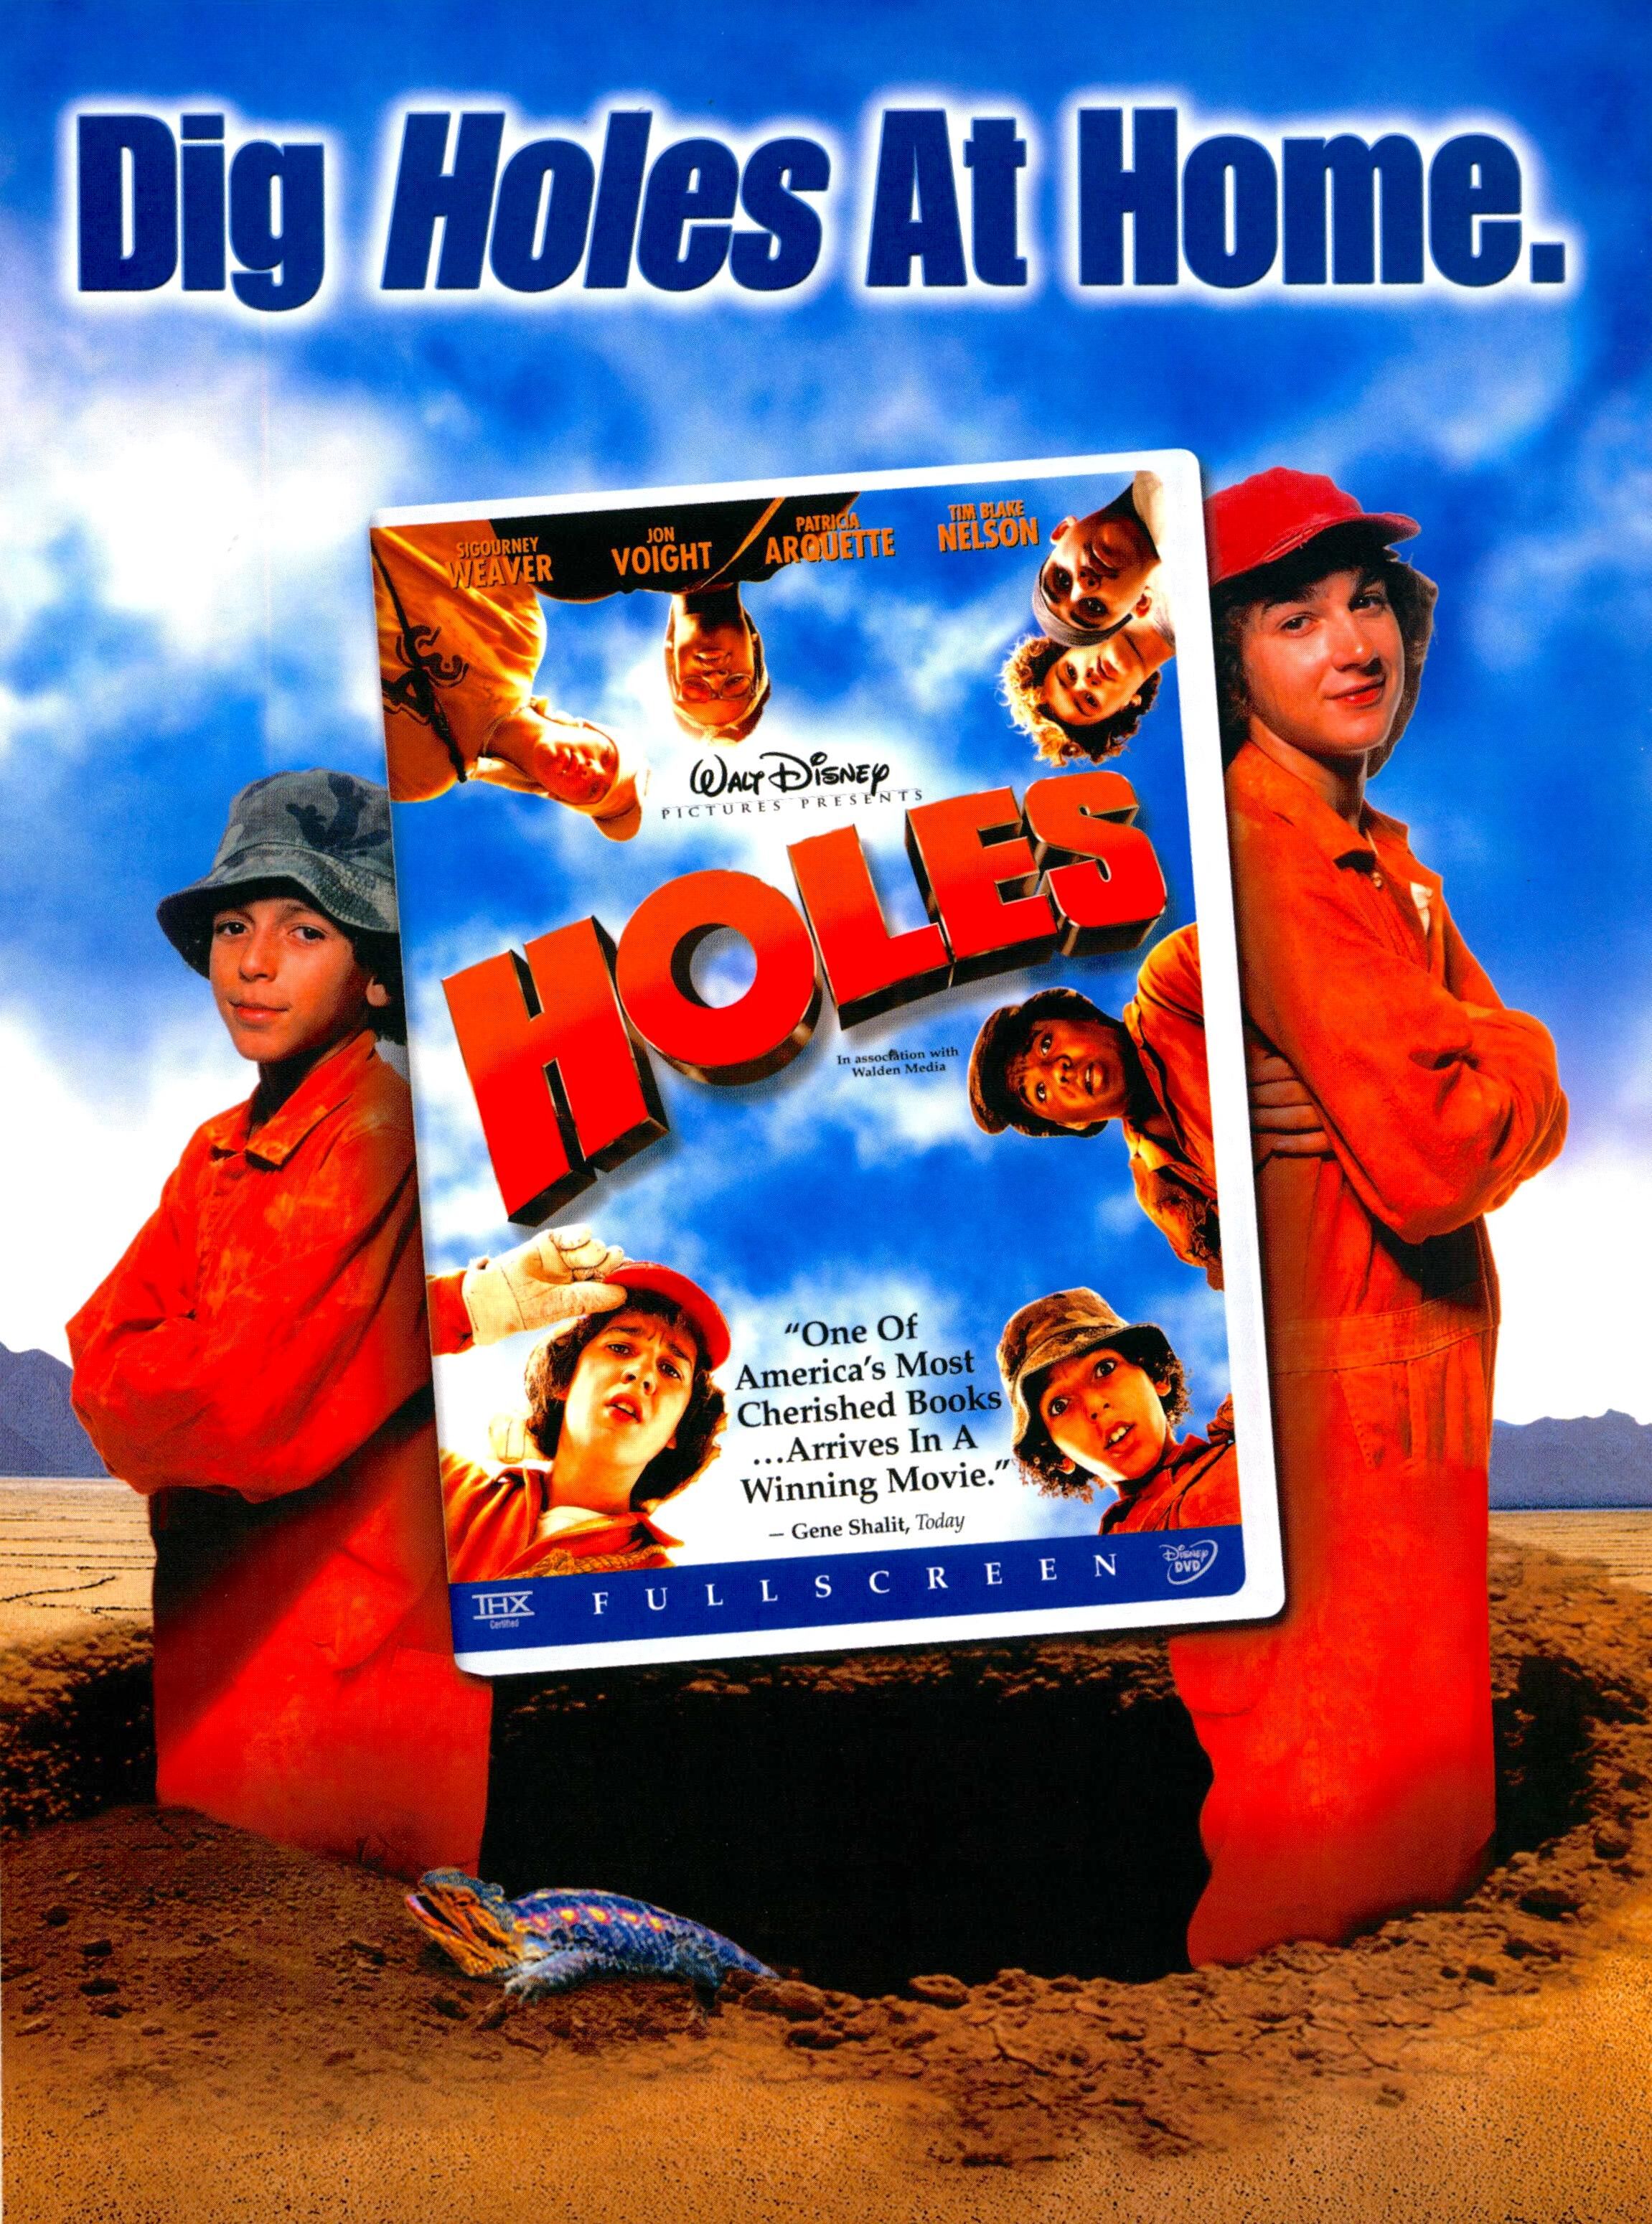 Holes (dvd)